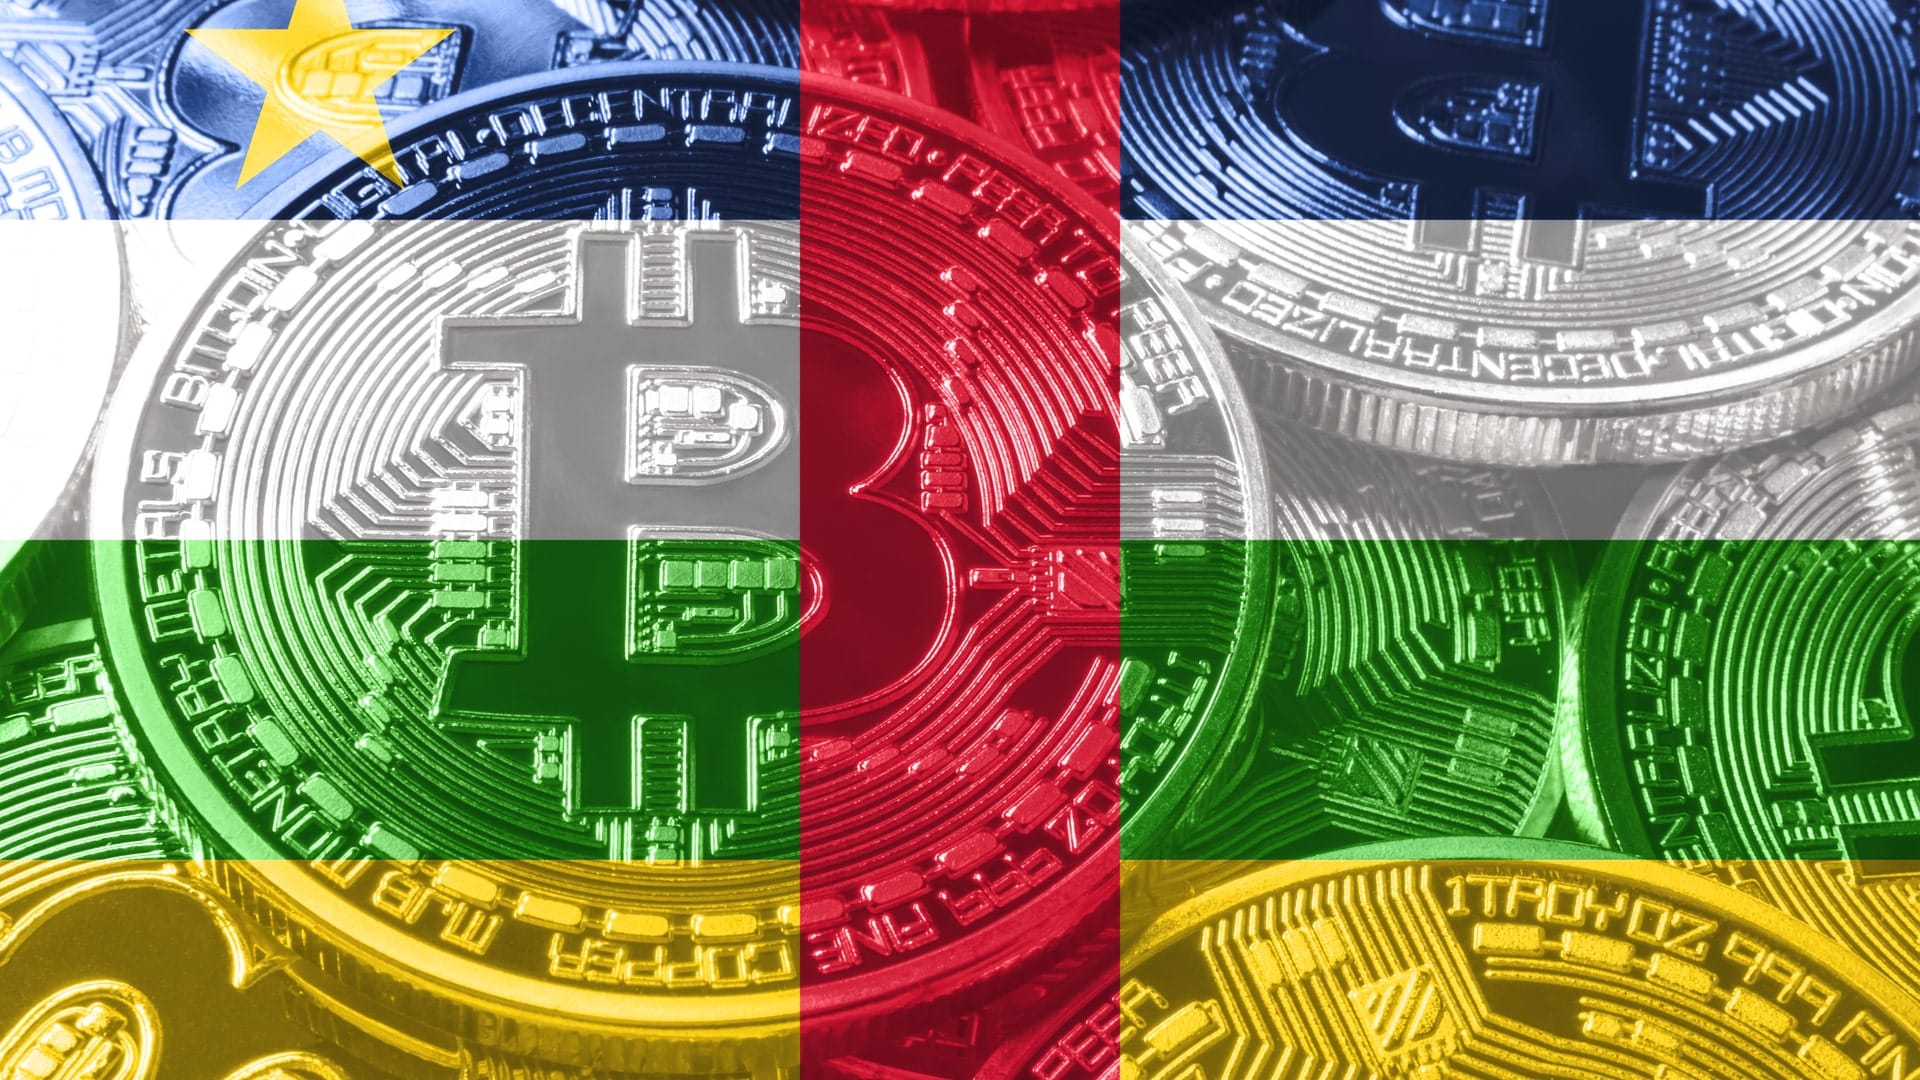 Stredoafrická republika oficiálne prijala Bitcoin ako zákonné platidlo!